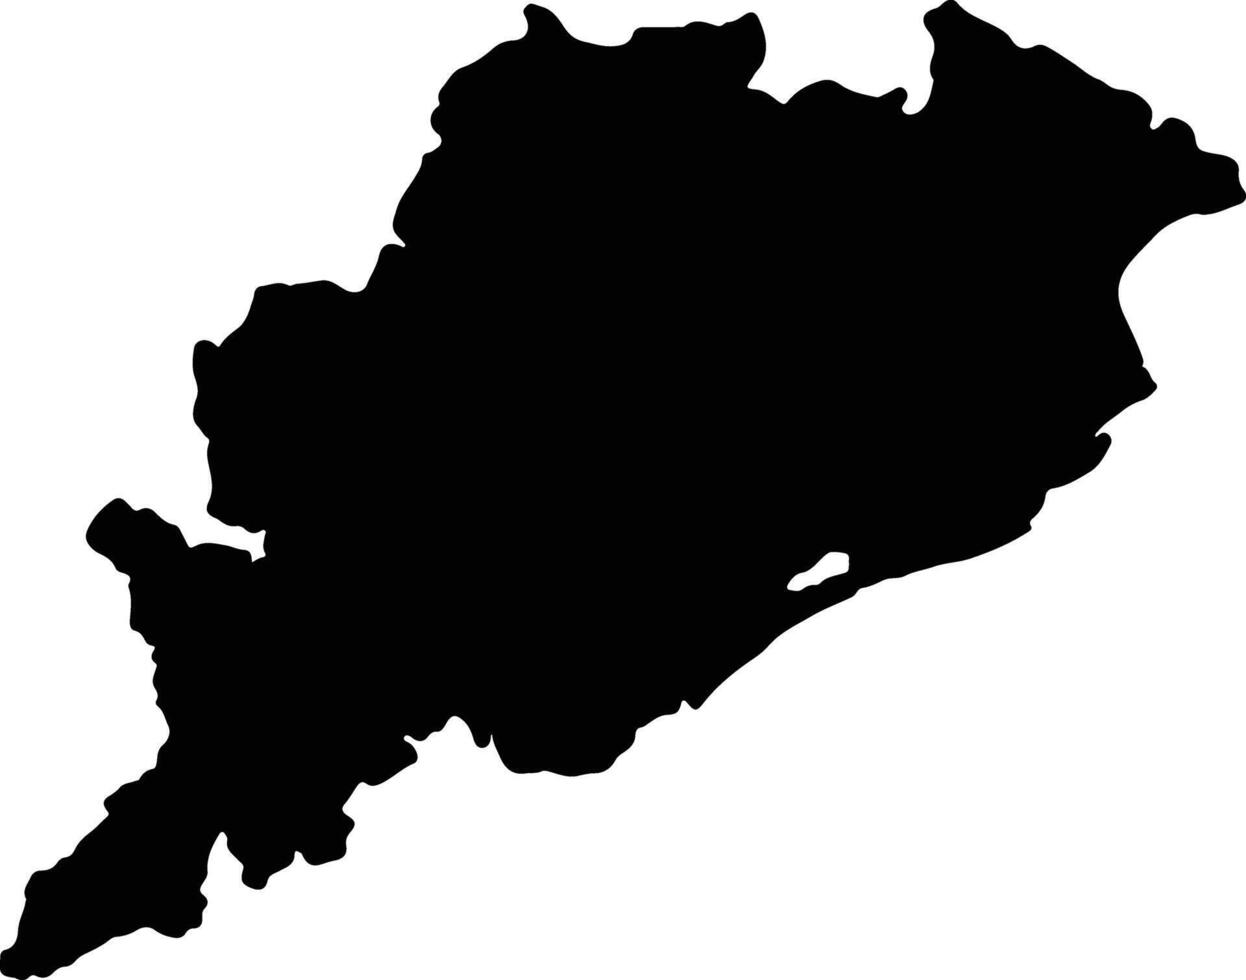 Orissa India silhouette map vector